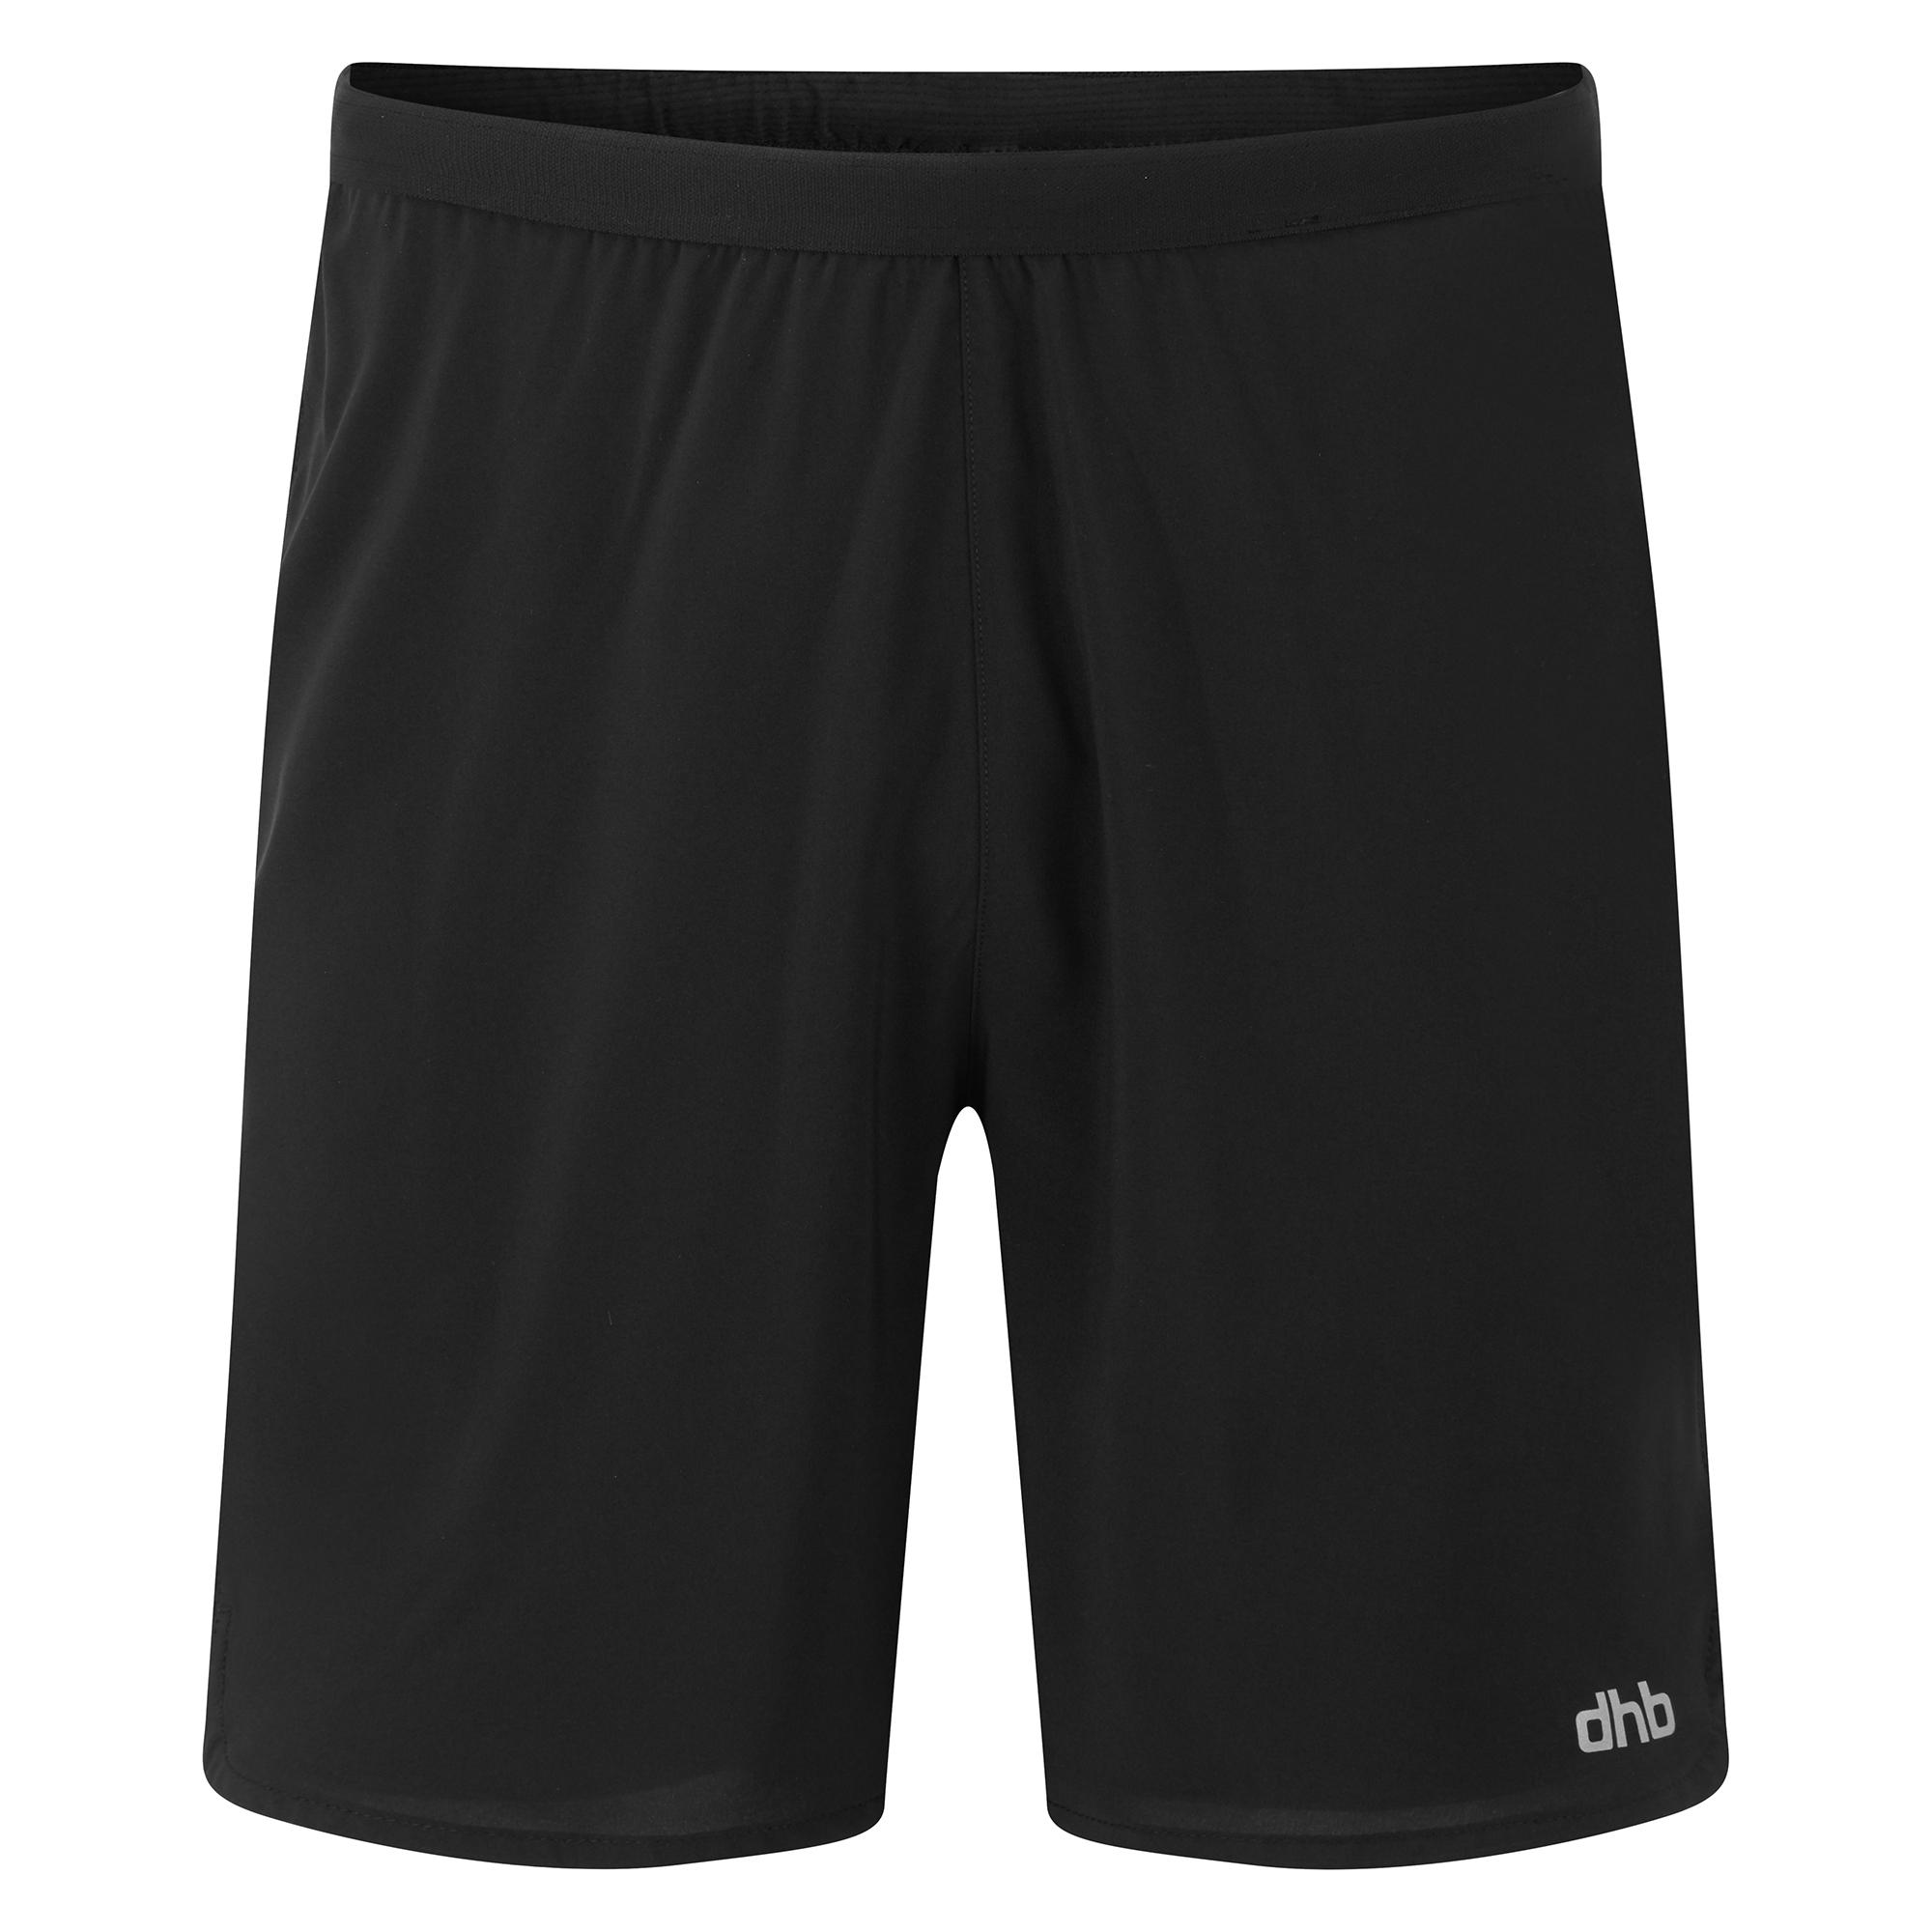 Dhb Aeron Run 7 Liner Shorts - Black